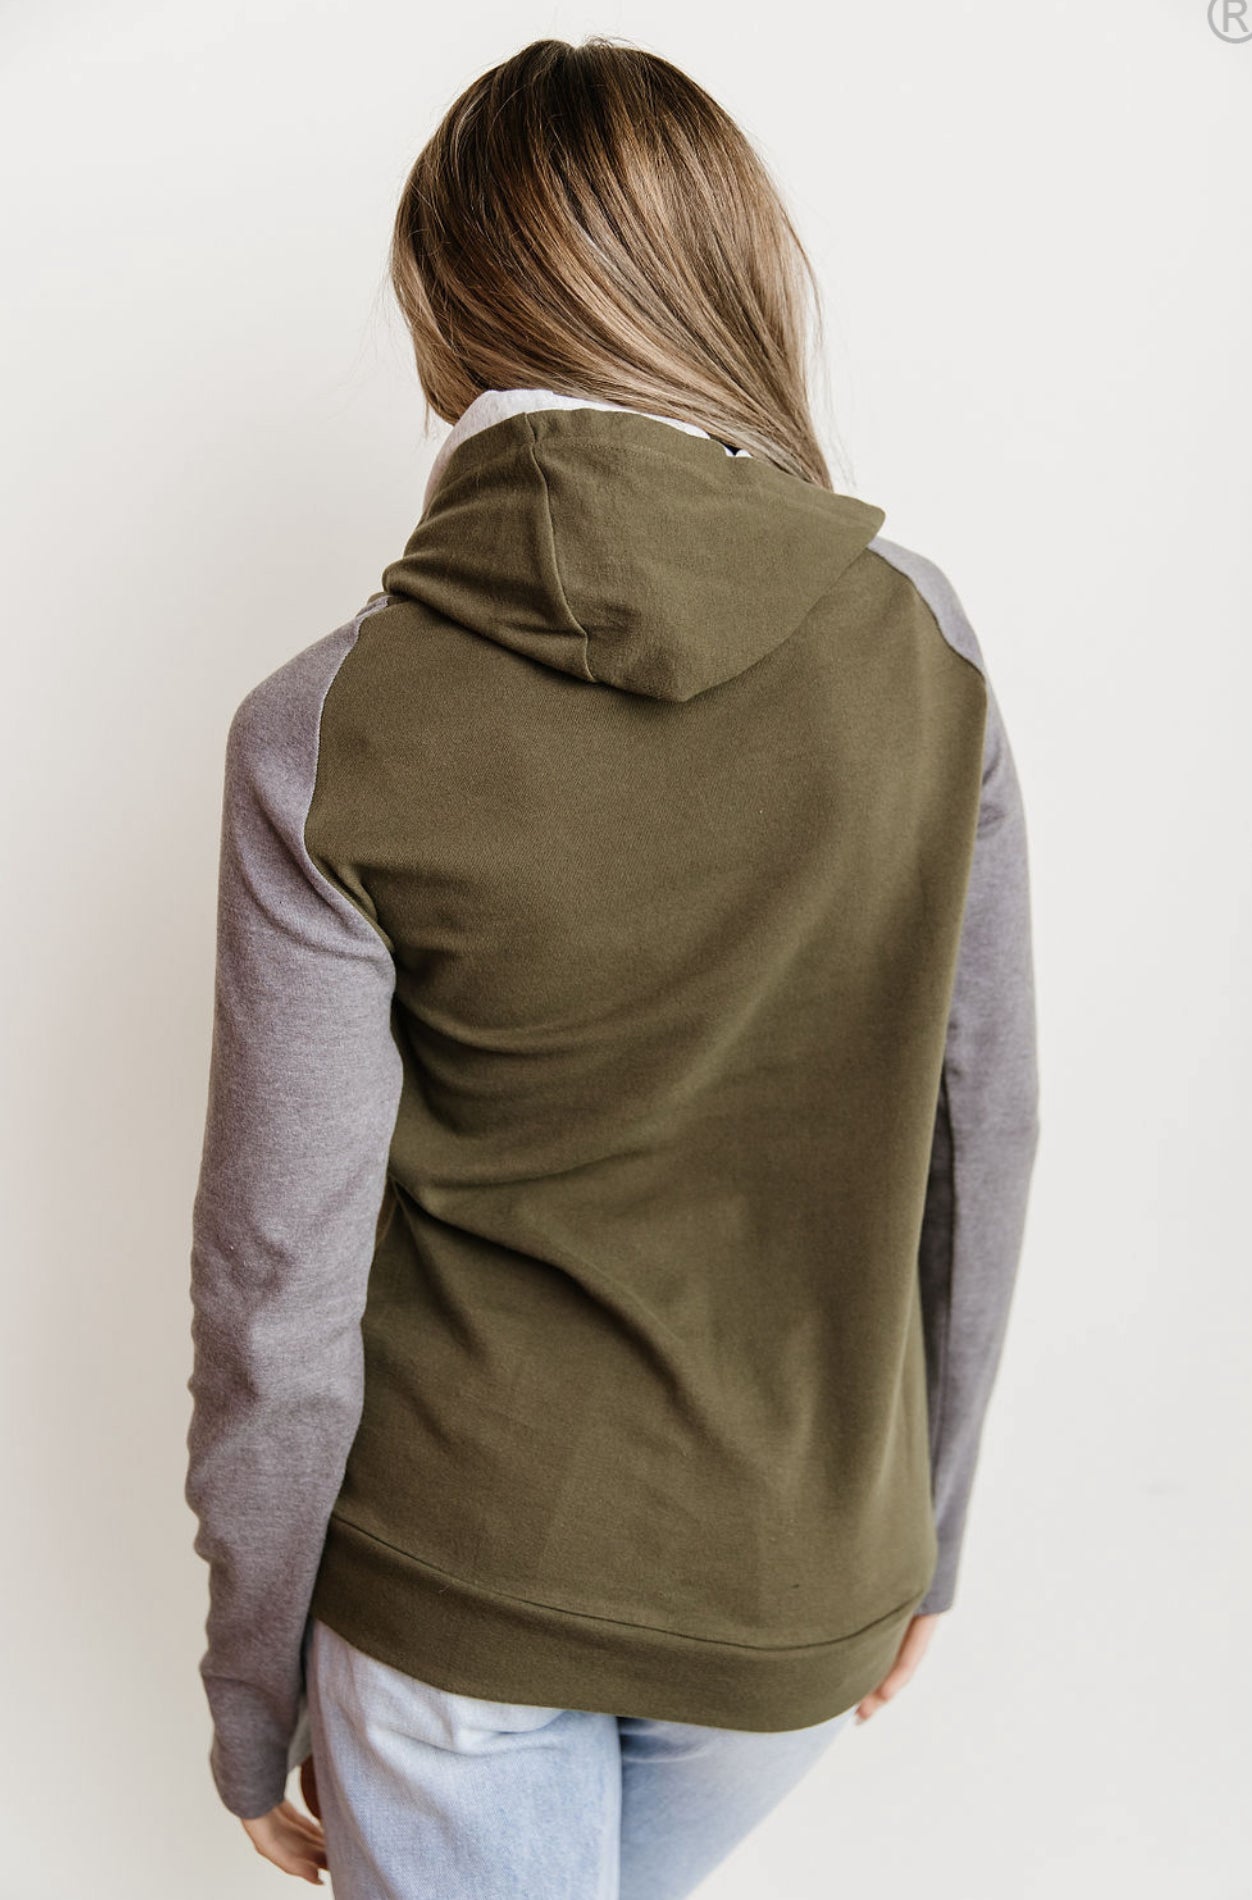 Double Hood Sweatshirt by Ampersand Avenue - green/grey - Blue Sky Fashions & Lingerie